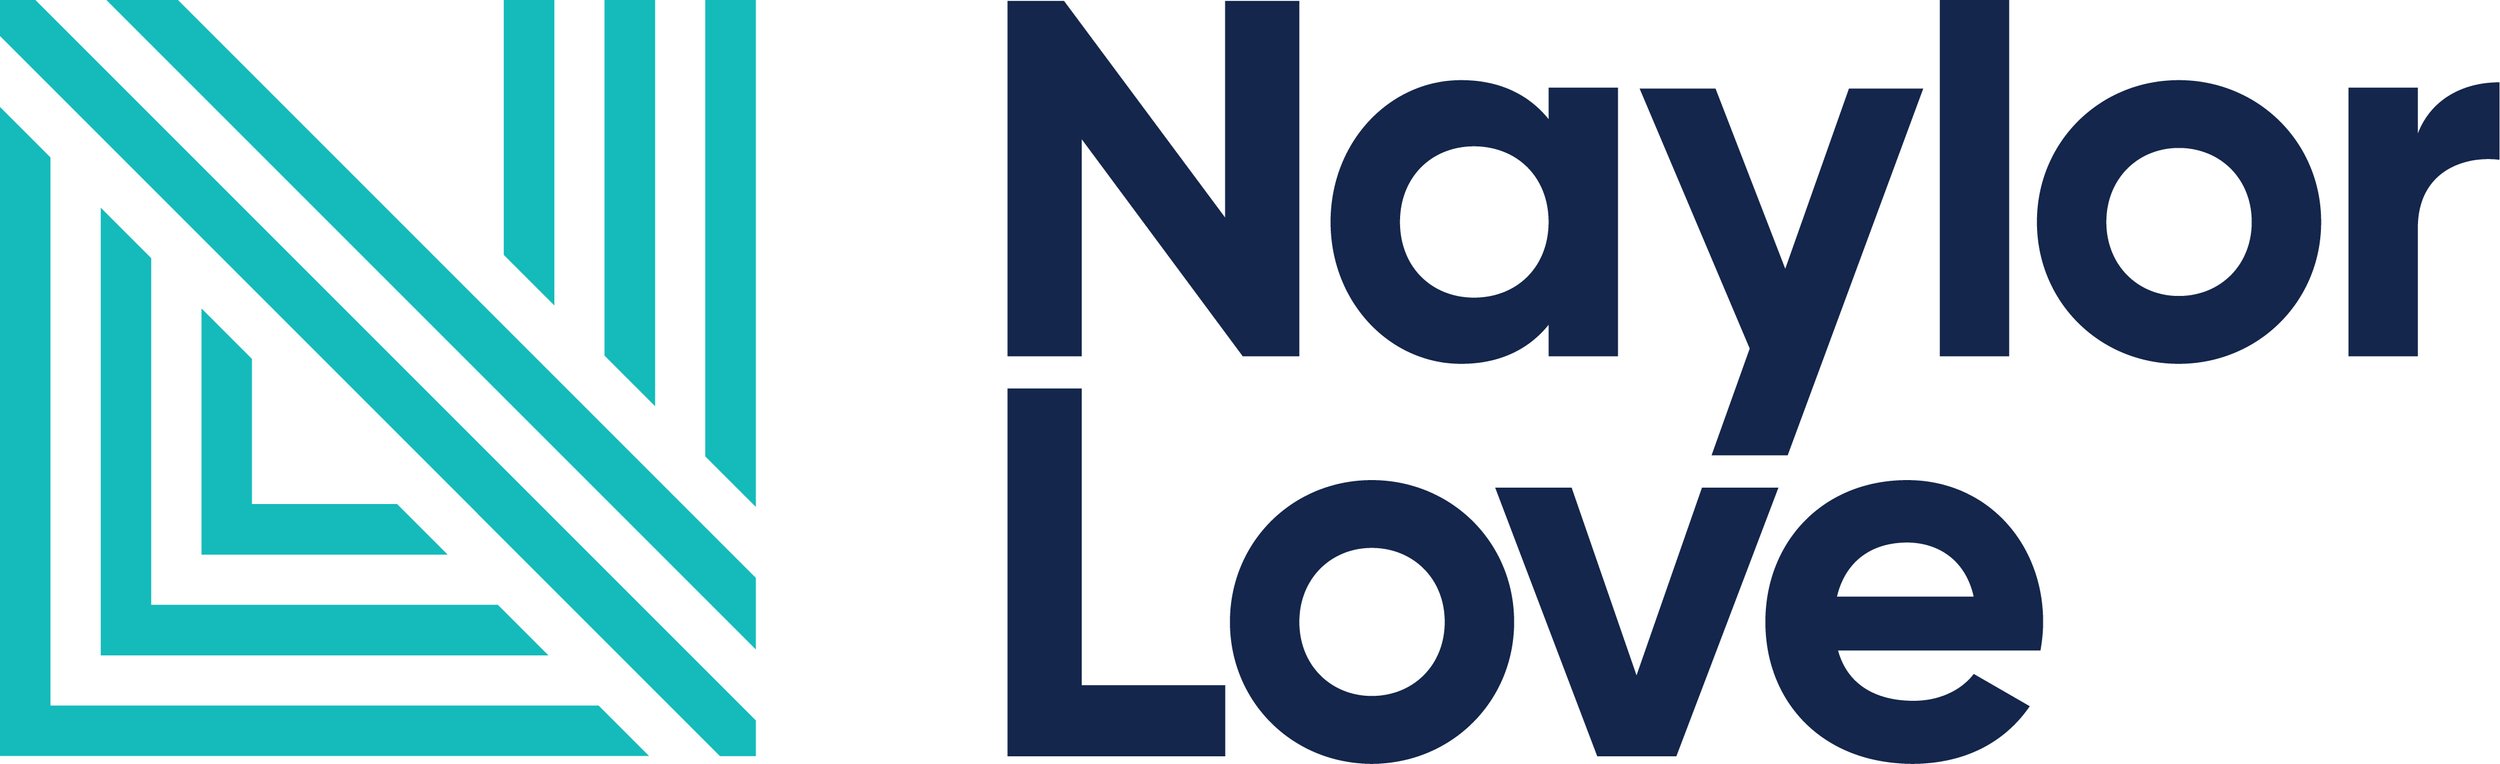 naylor-love-logo.jpg